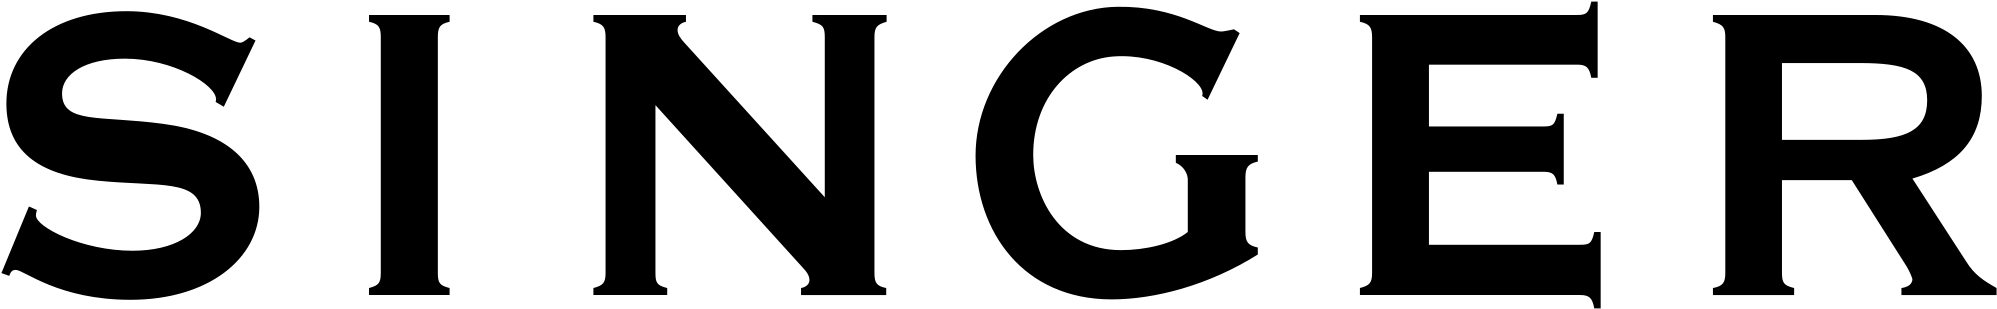 Singer Brand Logo PNG